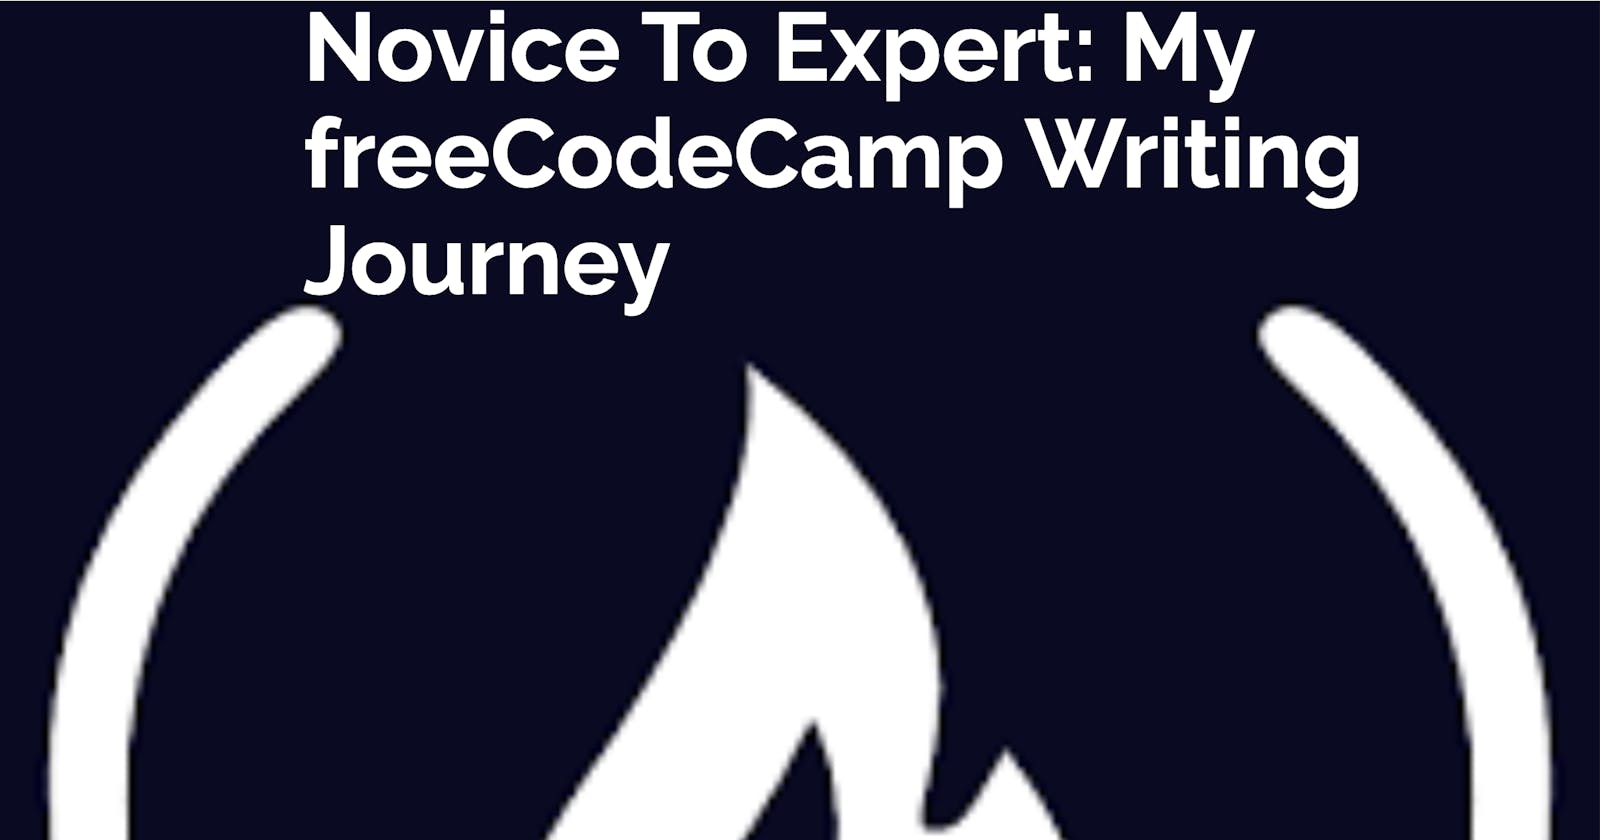 Novice To Expert: My freeCodeCamp Writing Journey